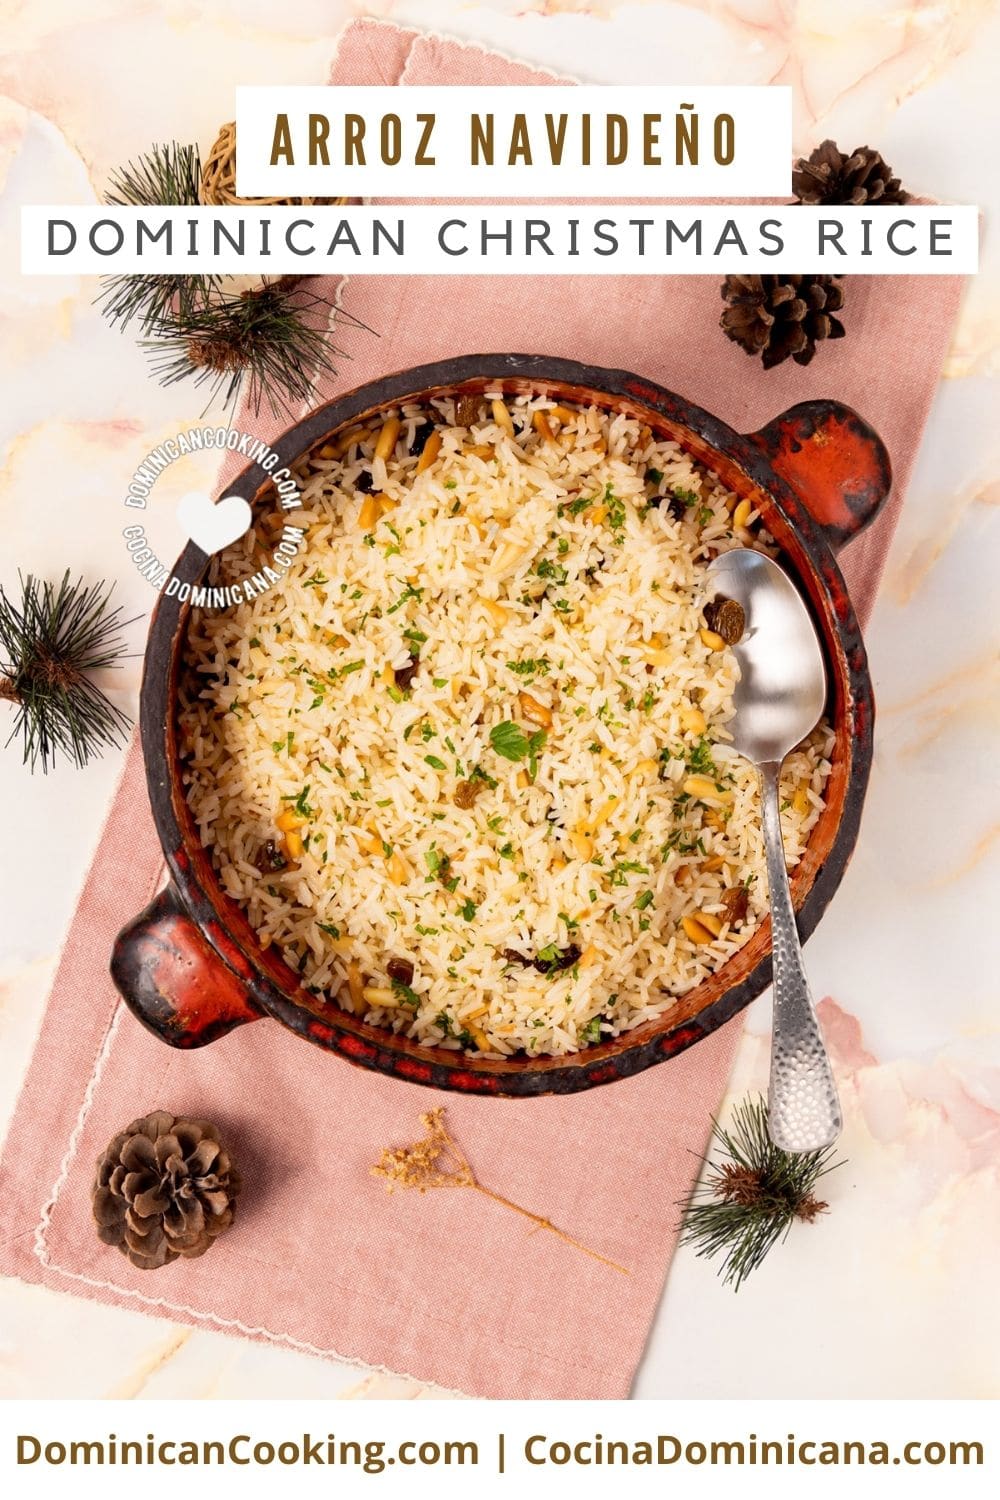 Arroz navideño (Dominican Christmas rice) recipe.